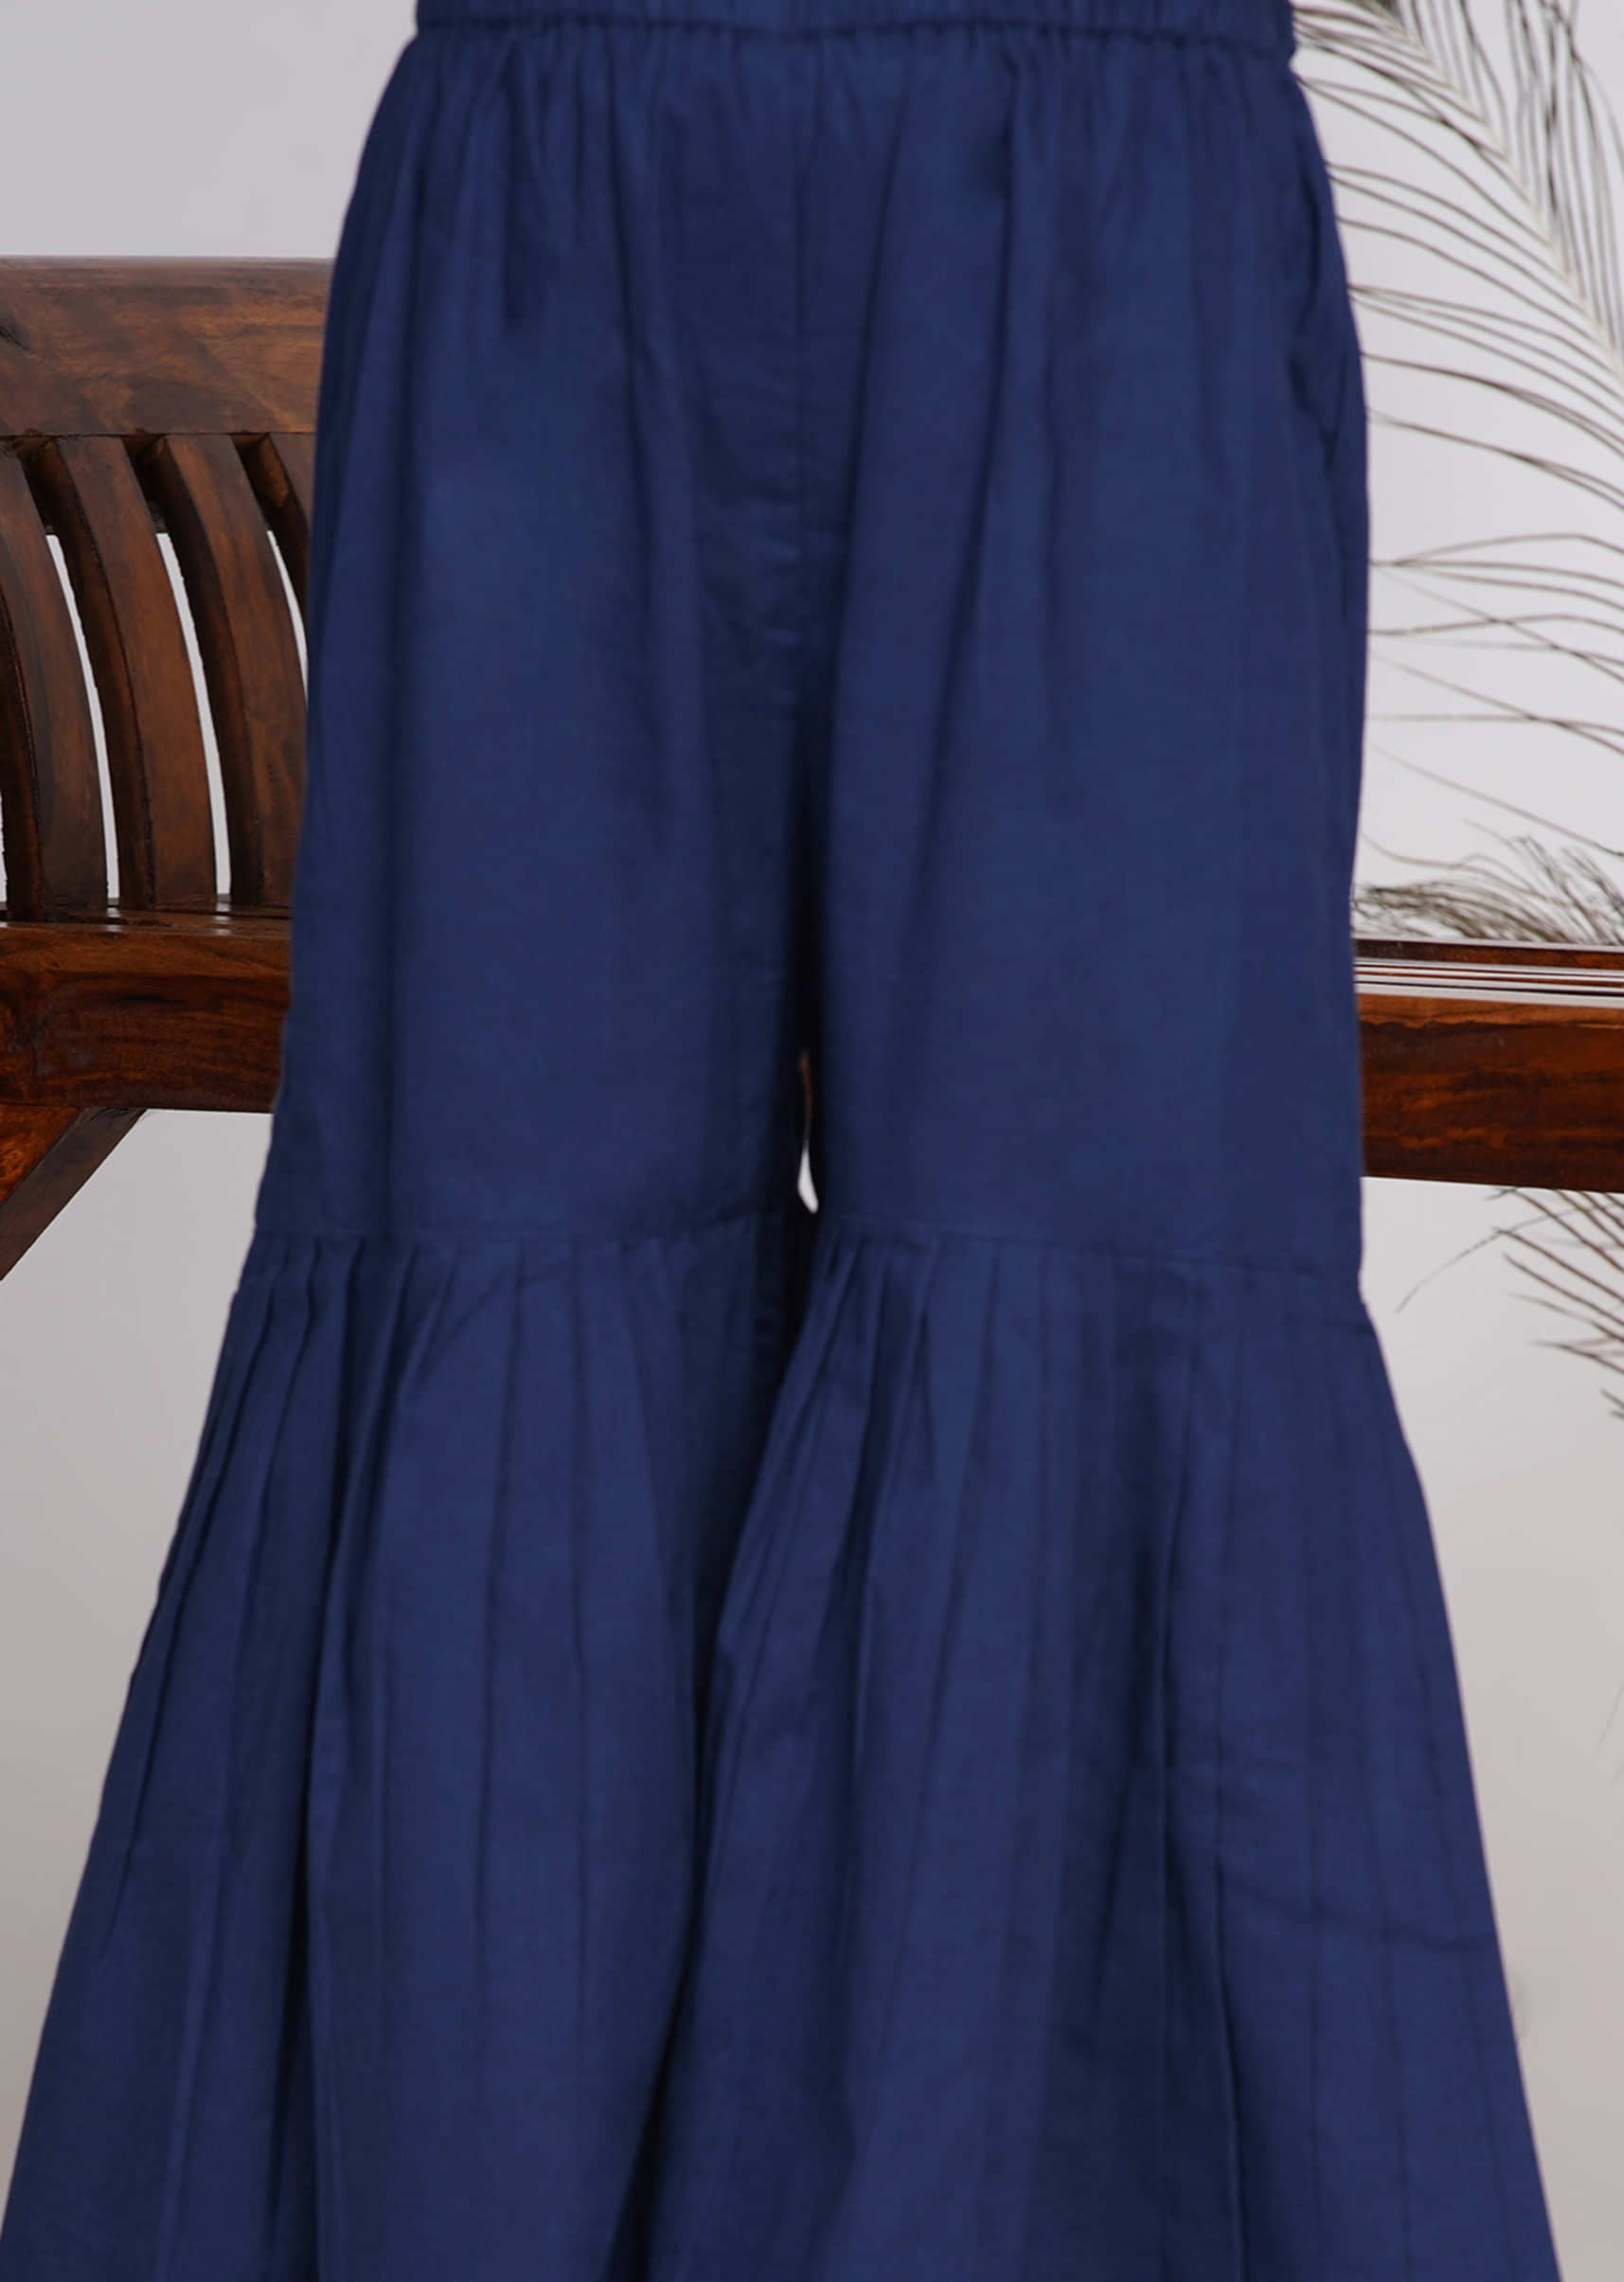 Kalki Indigo Blue Sharara Suit Set For Girls In Floral Print With Green Net Dupatta